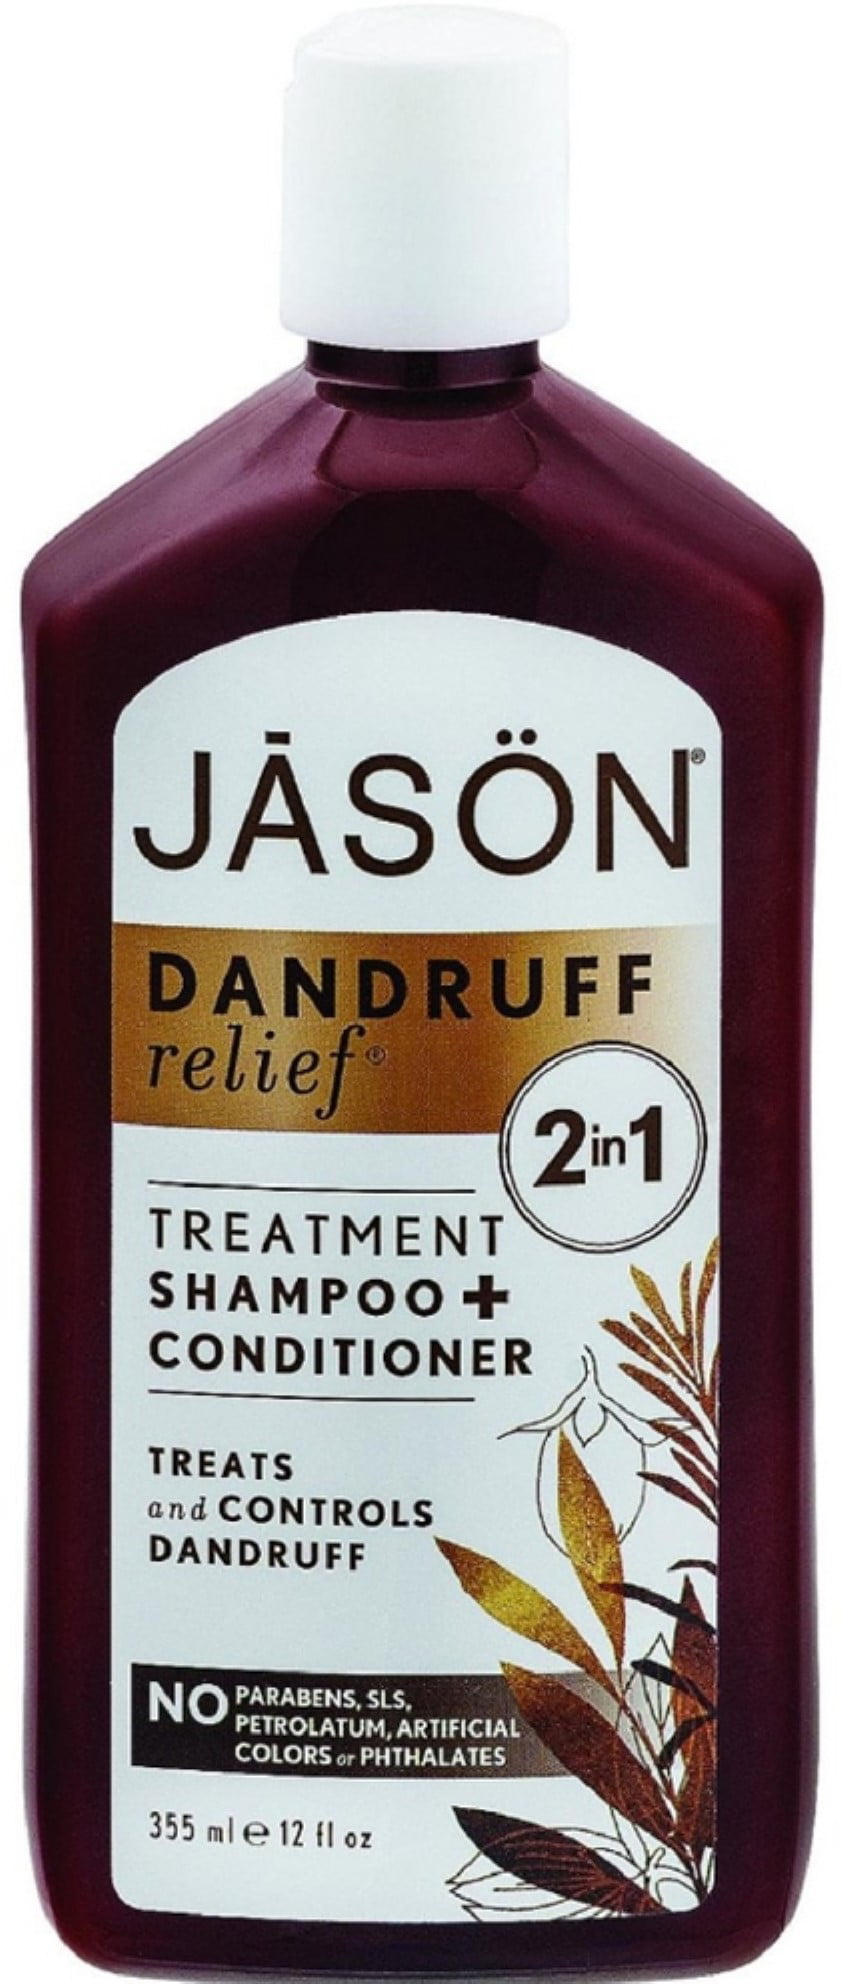 3 Pack - Jason Dandruff Relief 2 in1 Treatment Shampoo + Conditioner 12